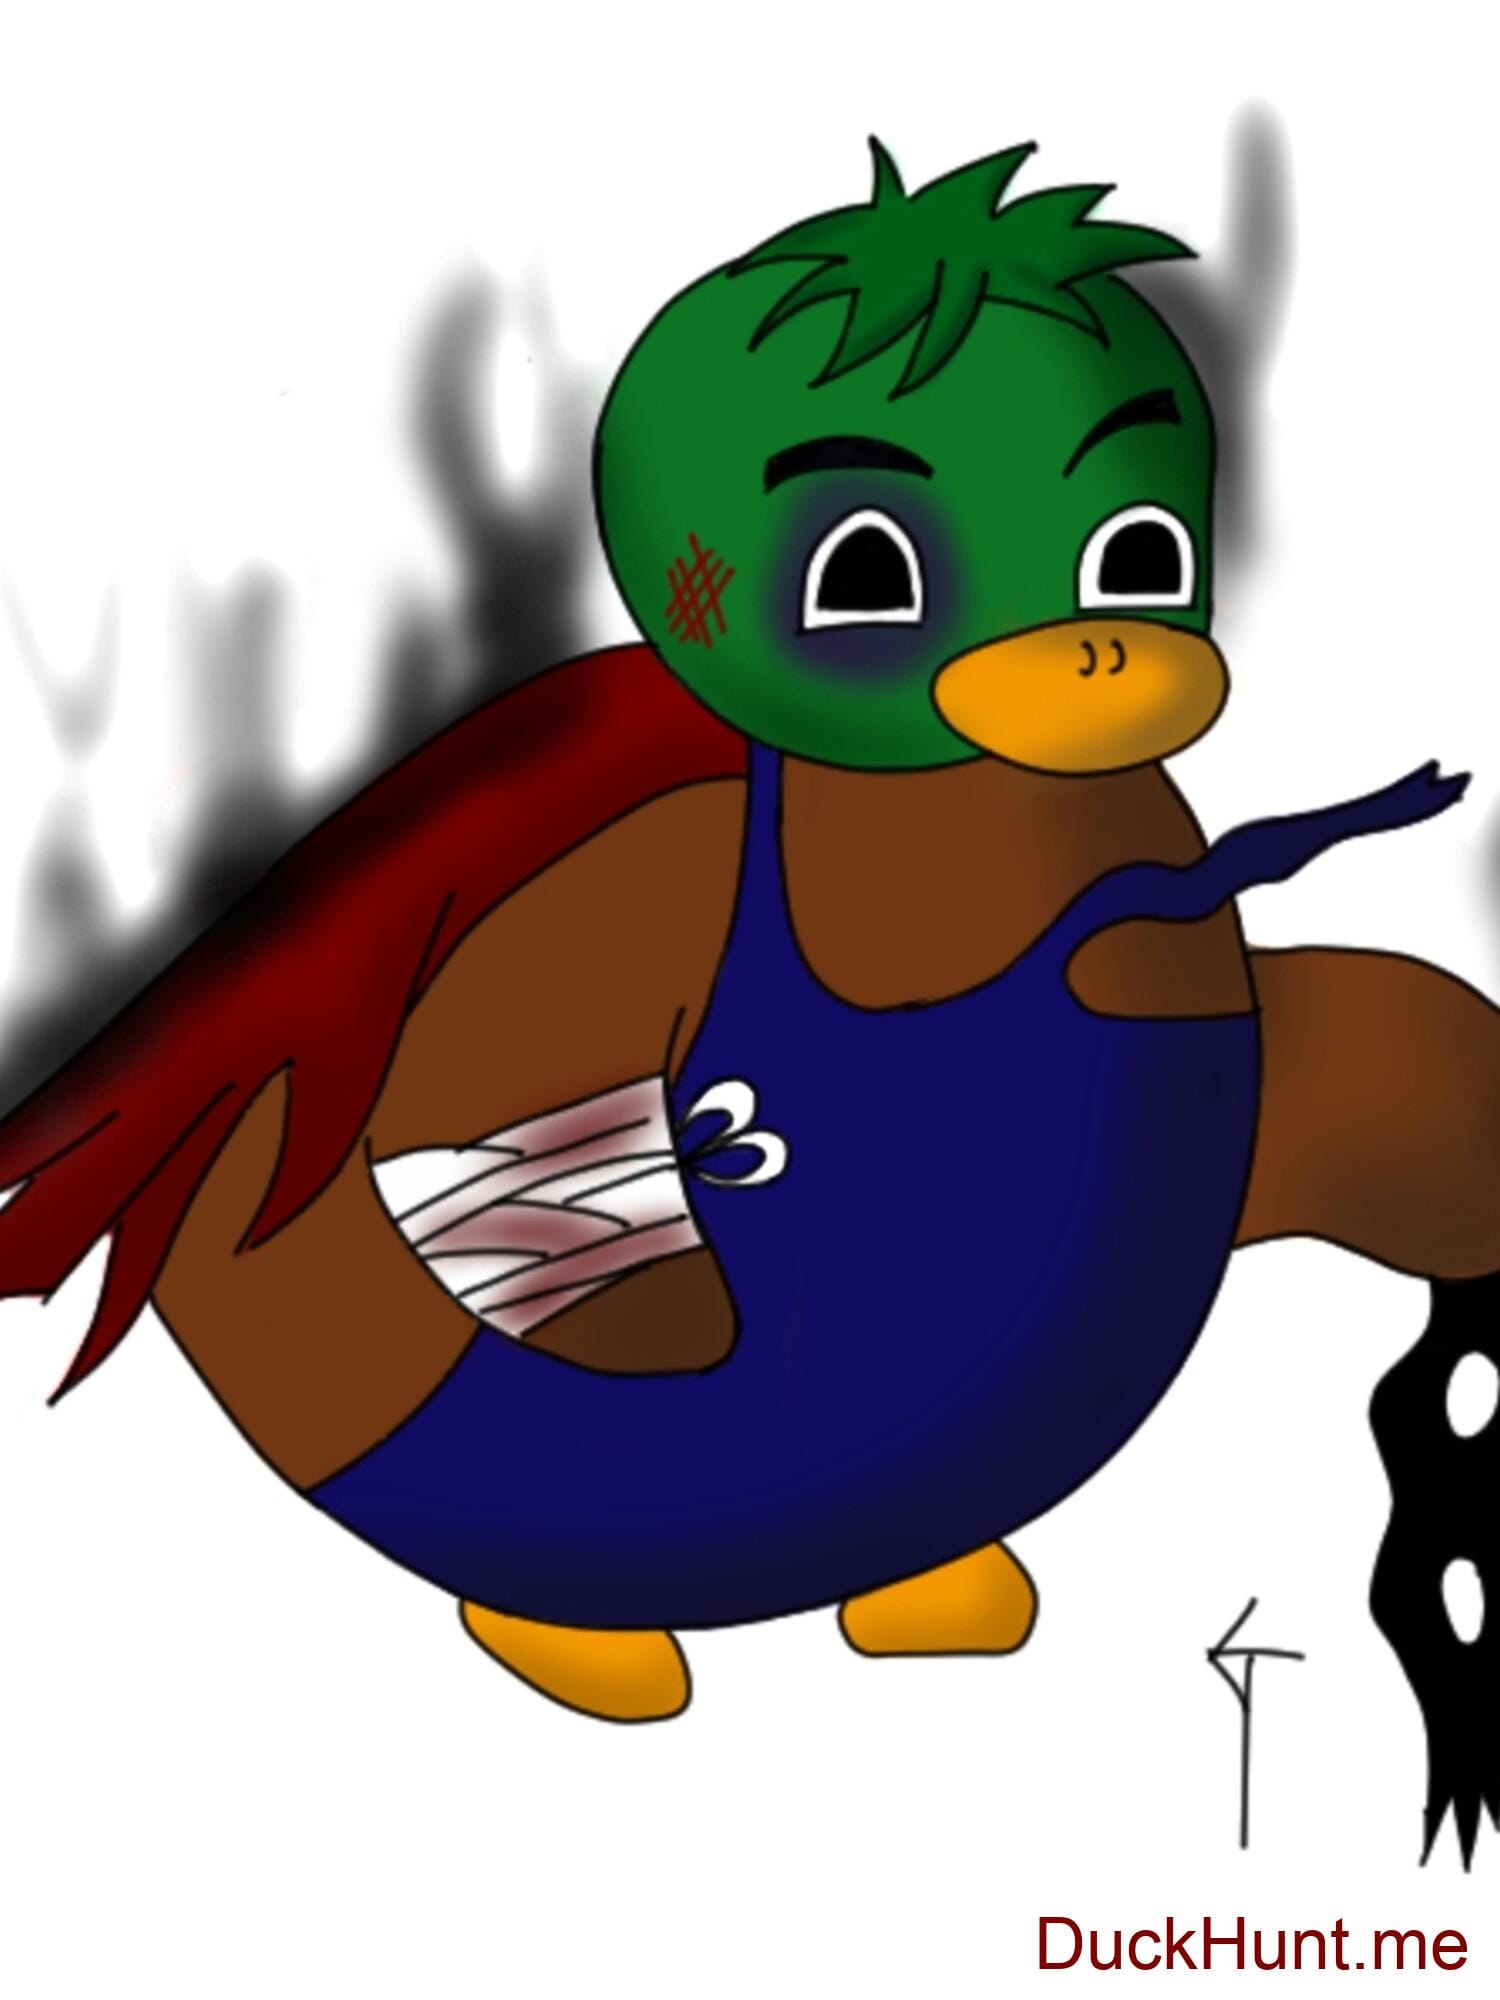 Dead Boss Duck (smoky) Black Sleeveless Top alternative image 2